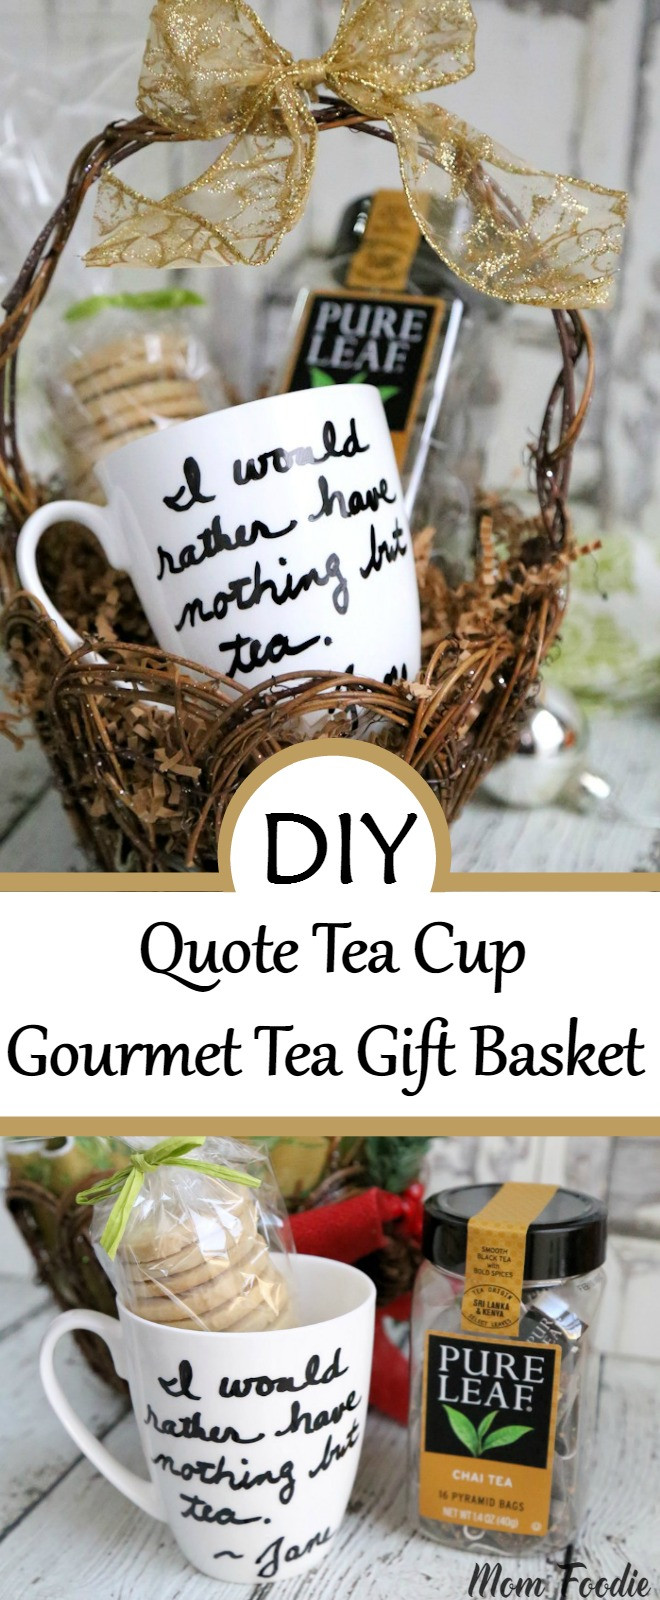 Tea Gift Basket Ideas
 Gourmet Tea Gift Basket with DIY Personalized Tea Cup